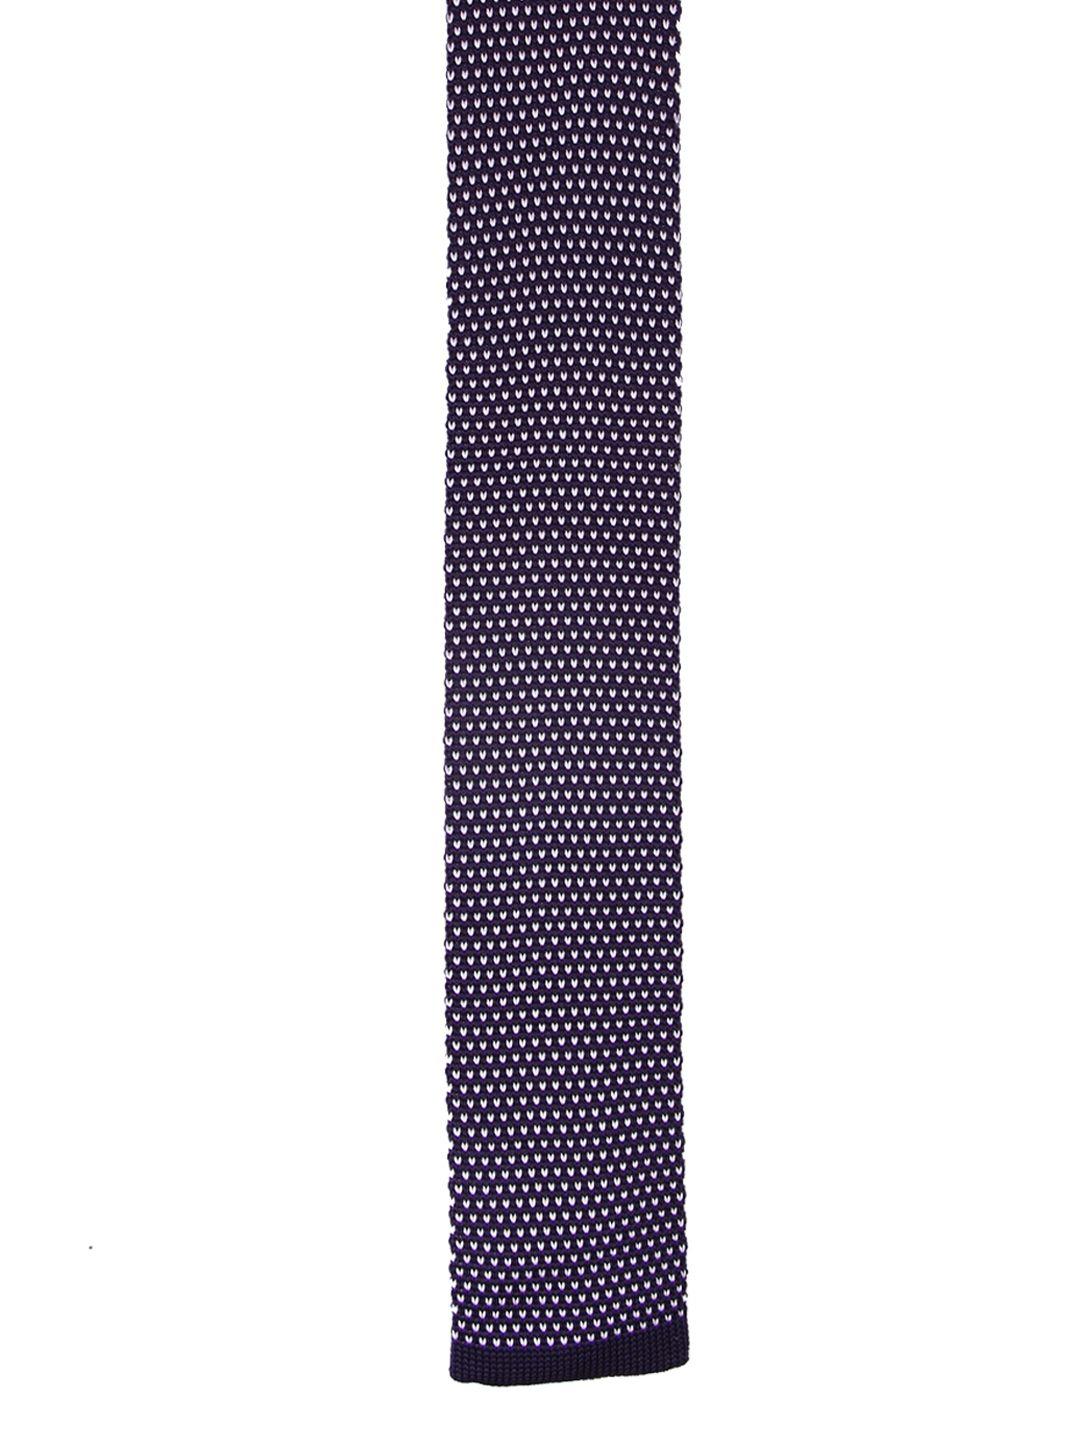 tossido purple & white knitted design skinny tie